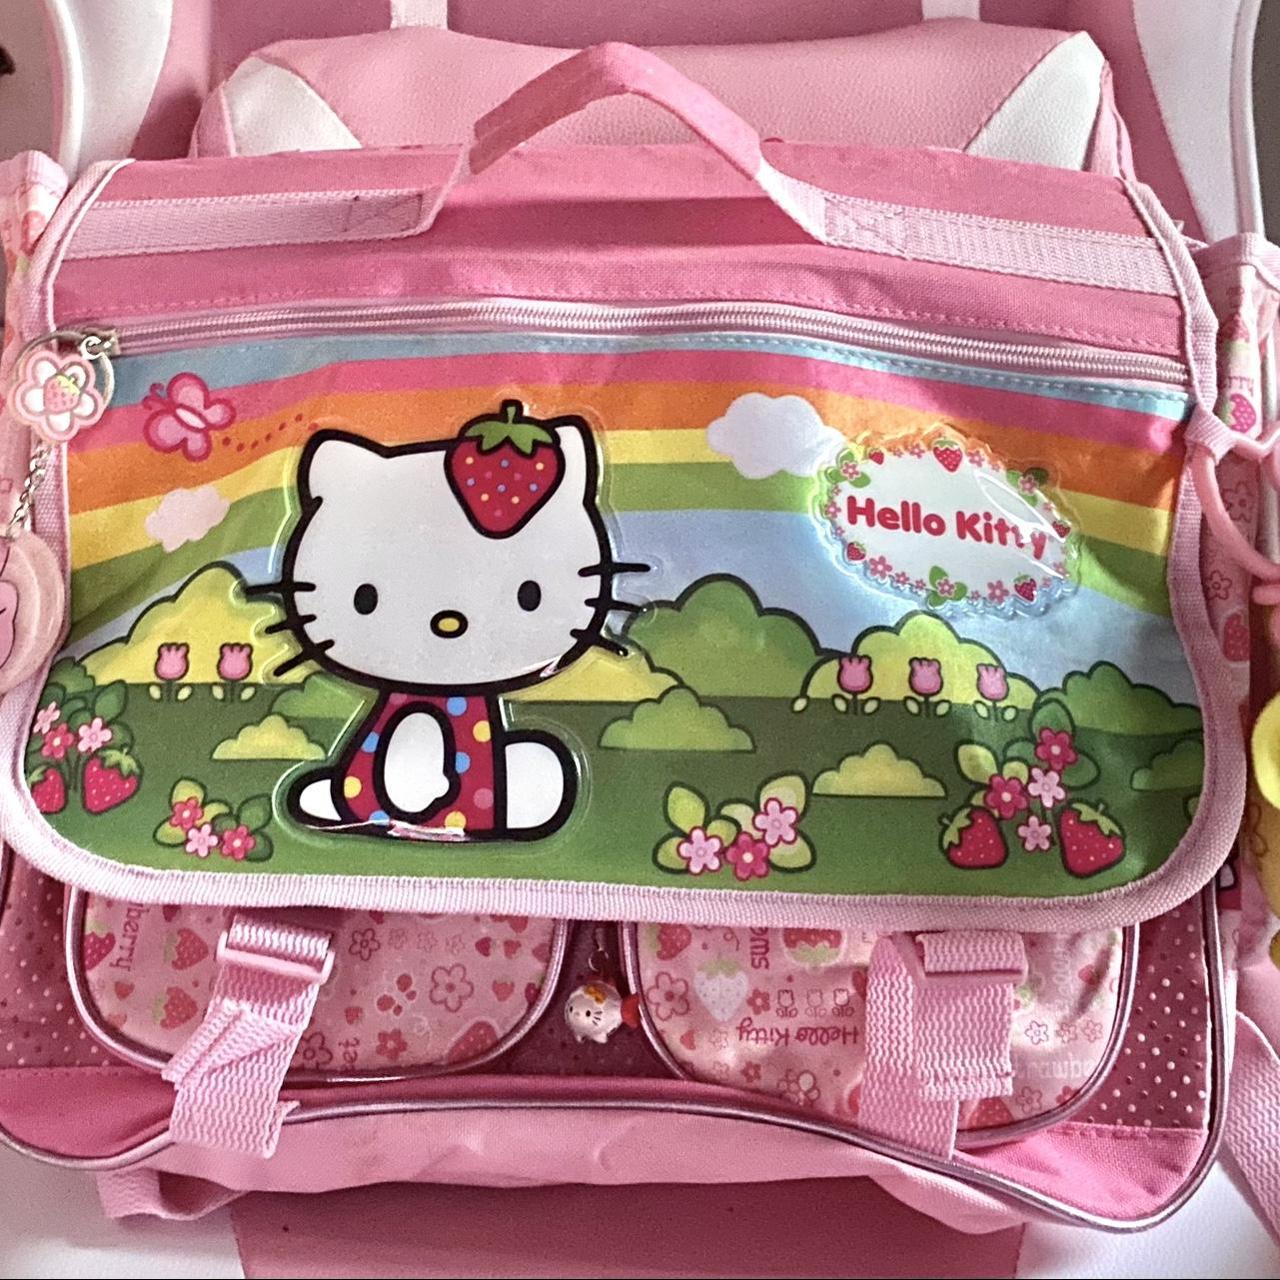 🫧 sanrio original hello kitty bag from 2011, brand... - Depop